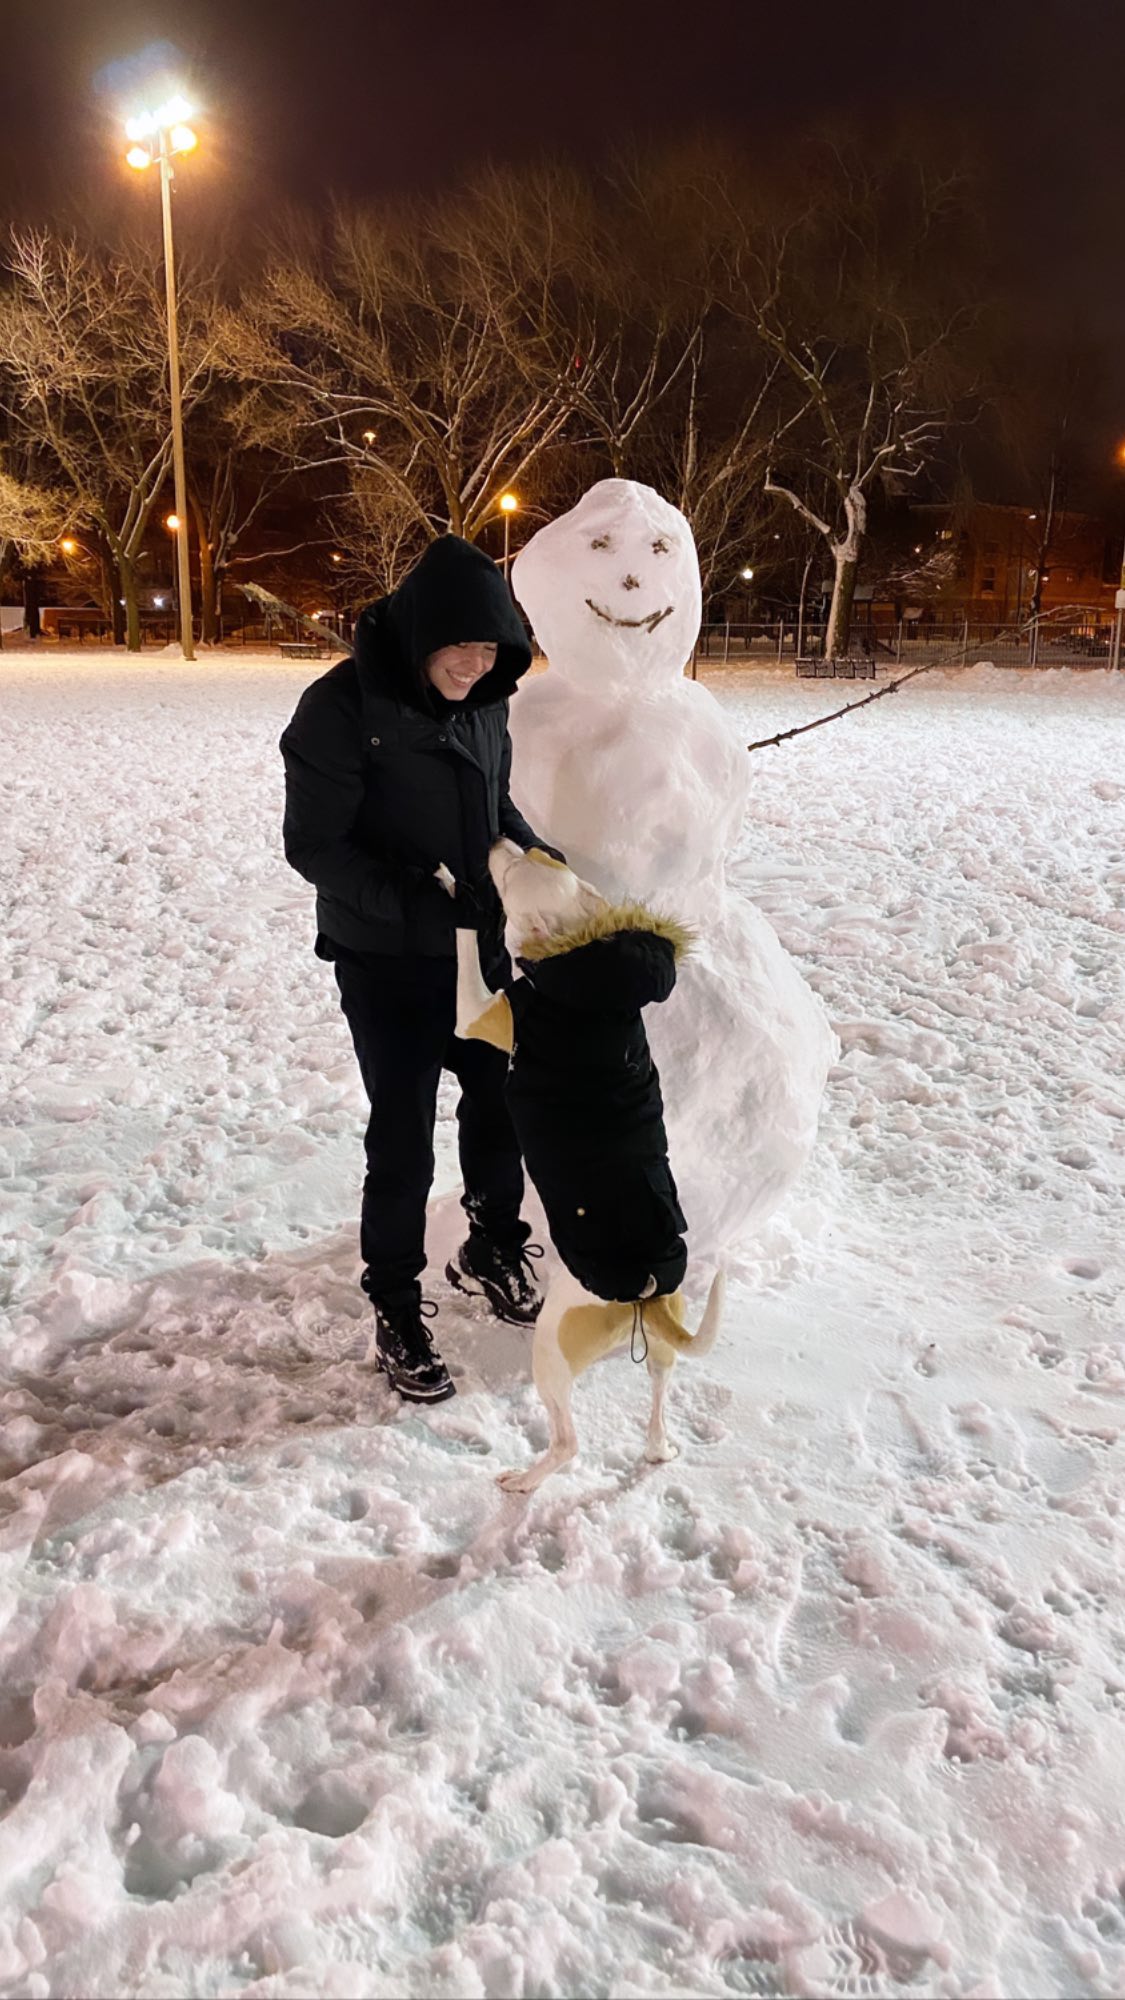 Sydney Sweeney Builds a Snowman Army! - Photo 4